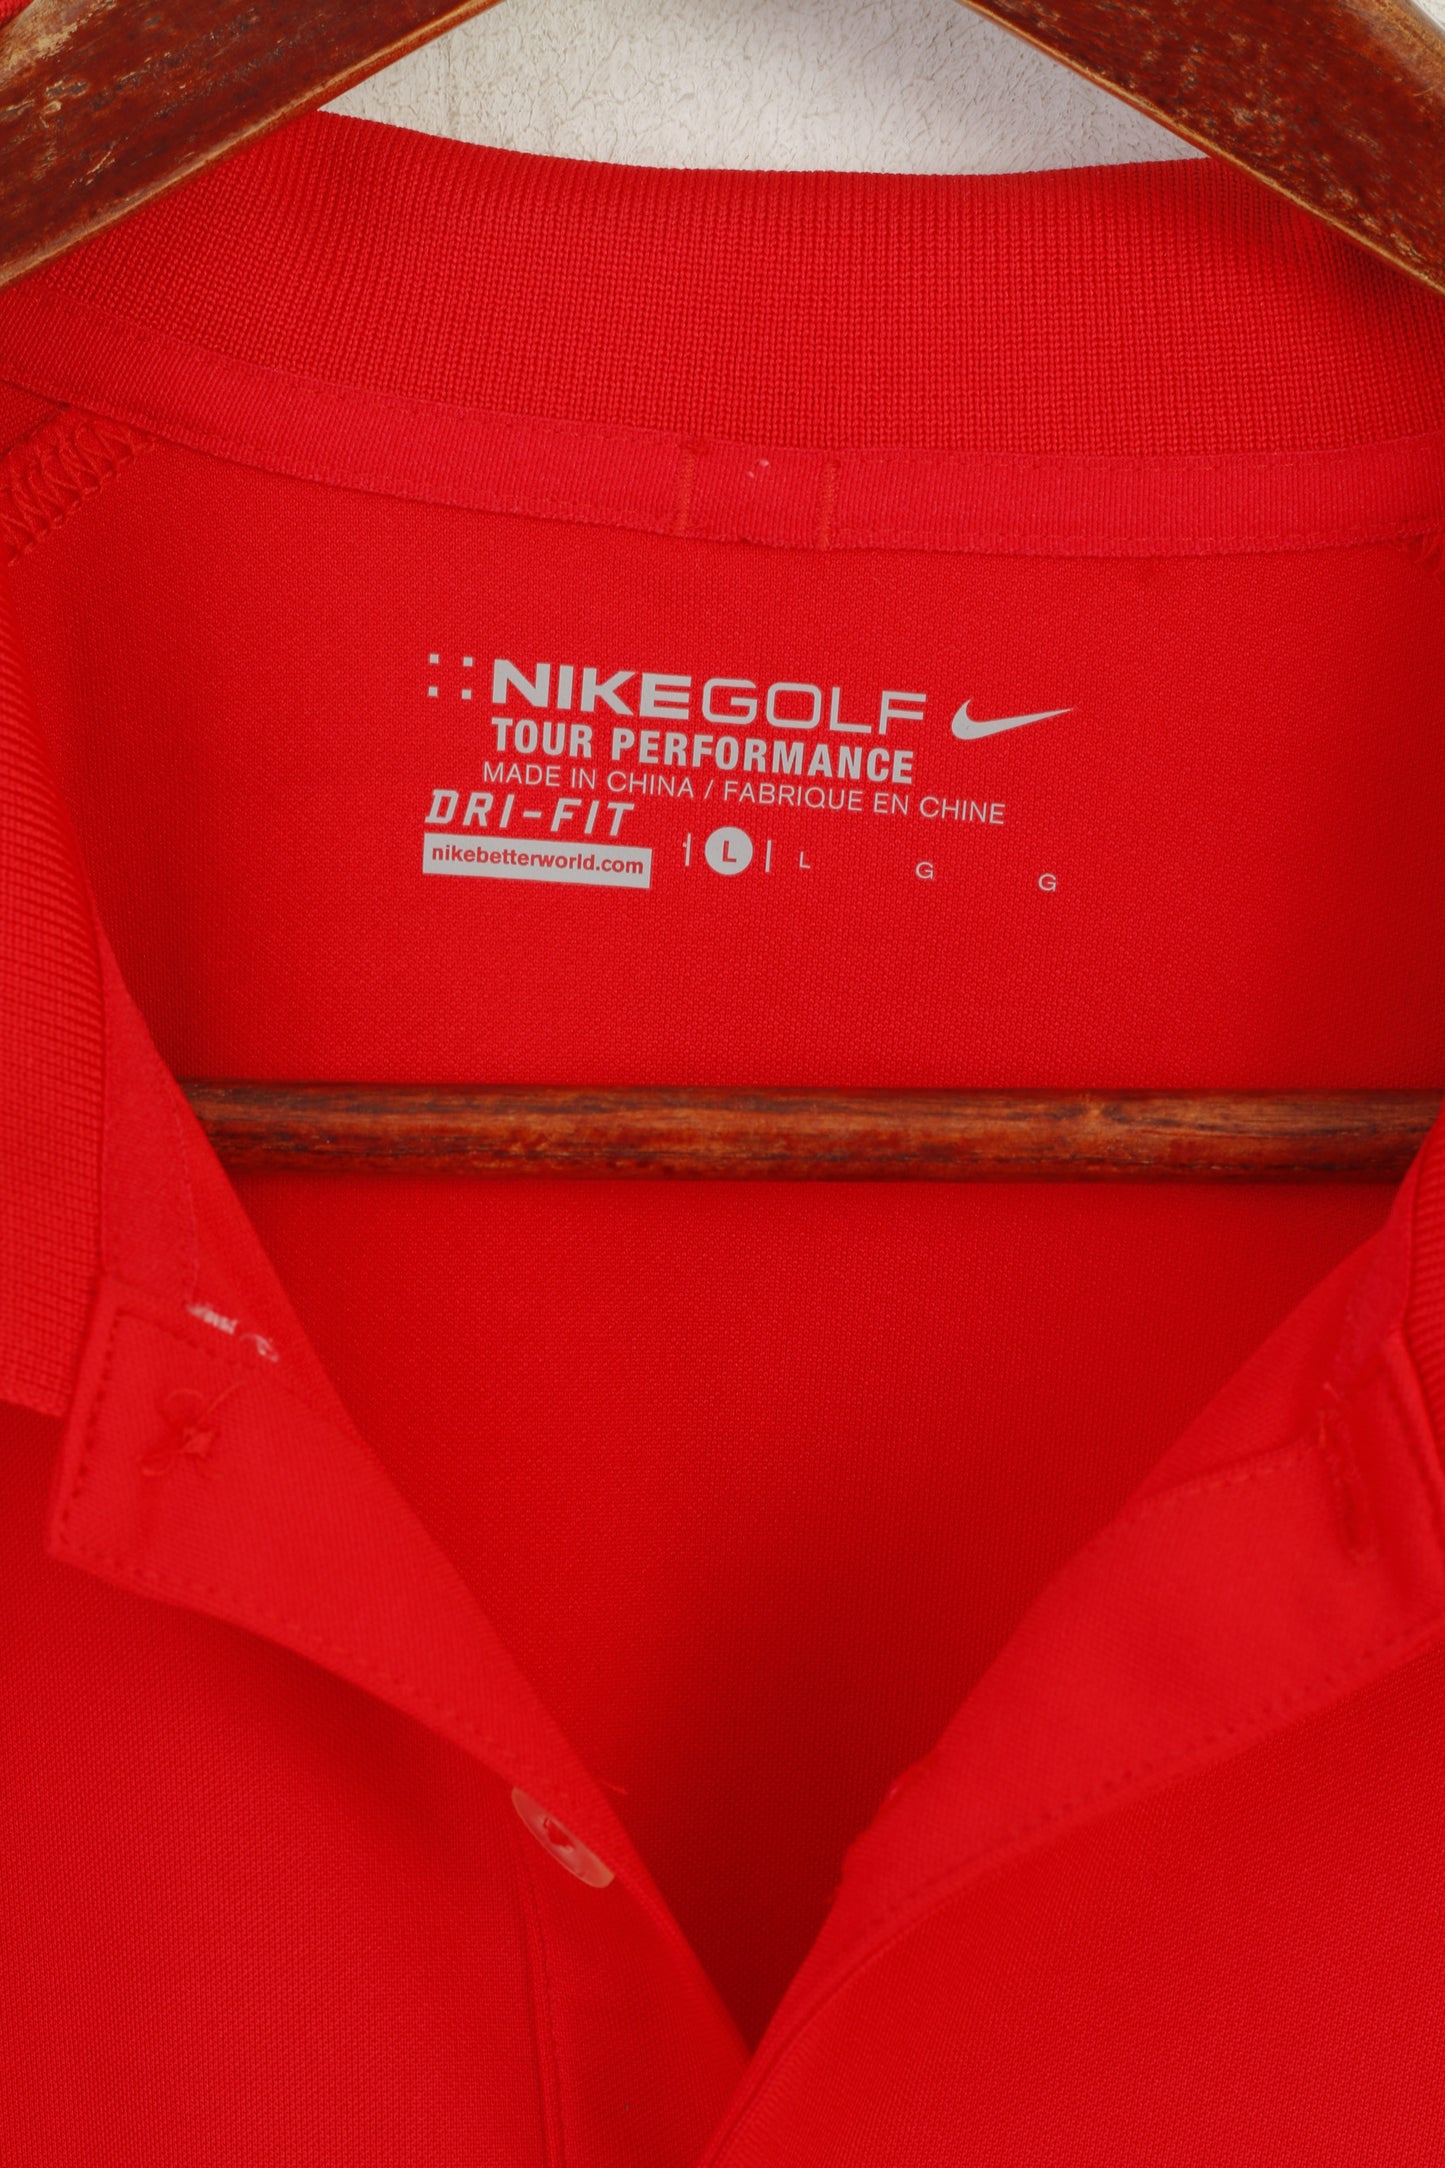 Nike Golf Men L Polo Shirt Red Dri-Fit Team USA 2015 Performance Jersey Top